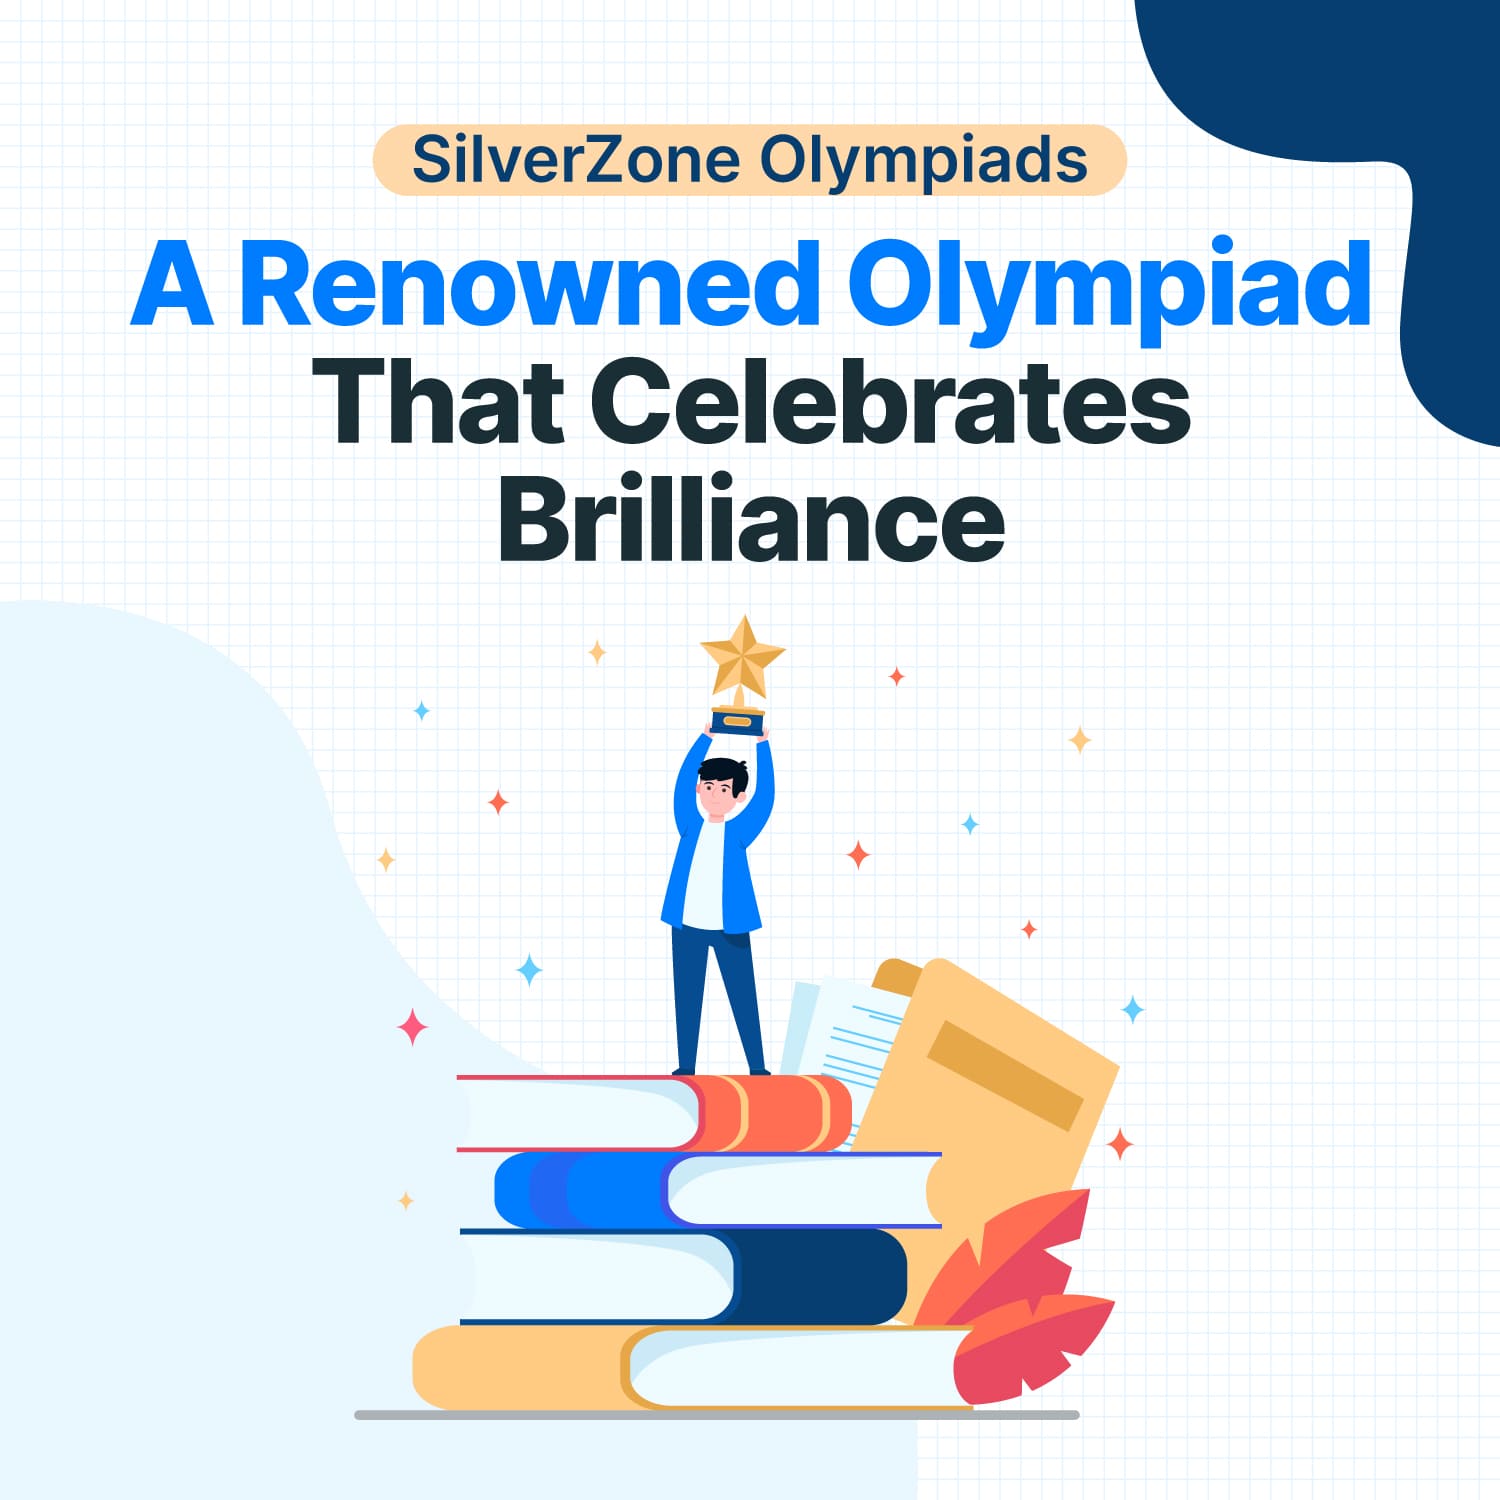 silverzone olympiad